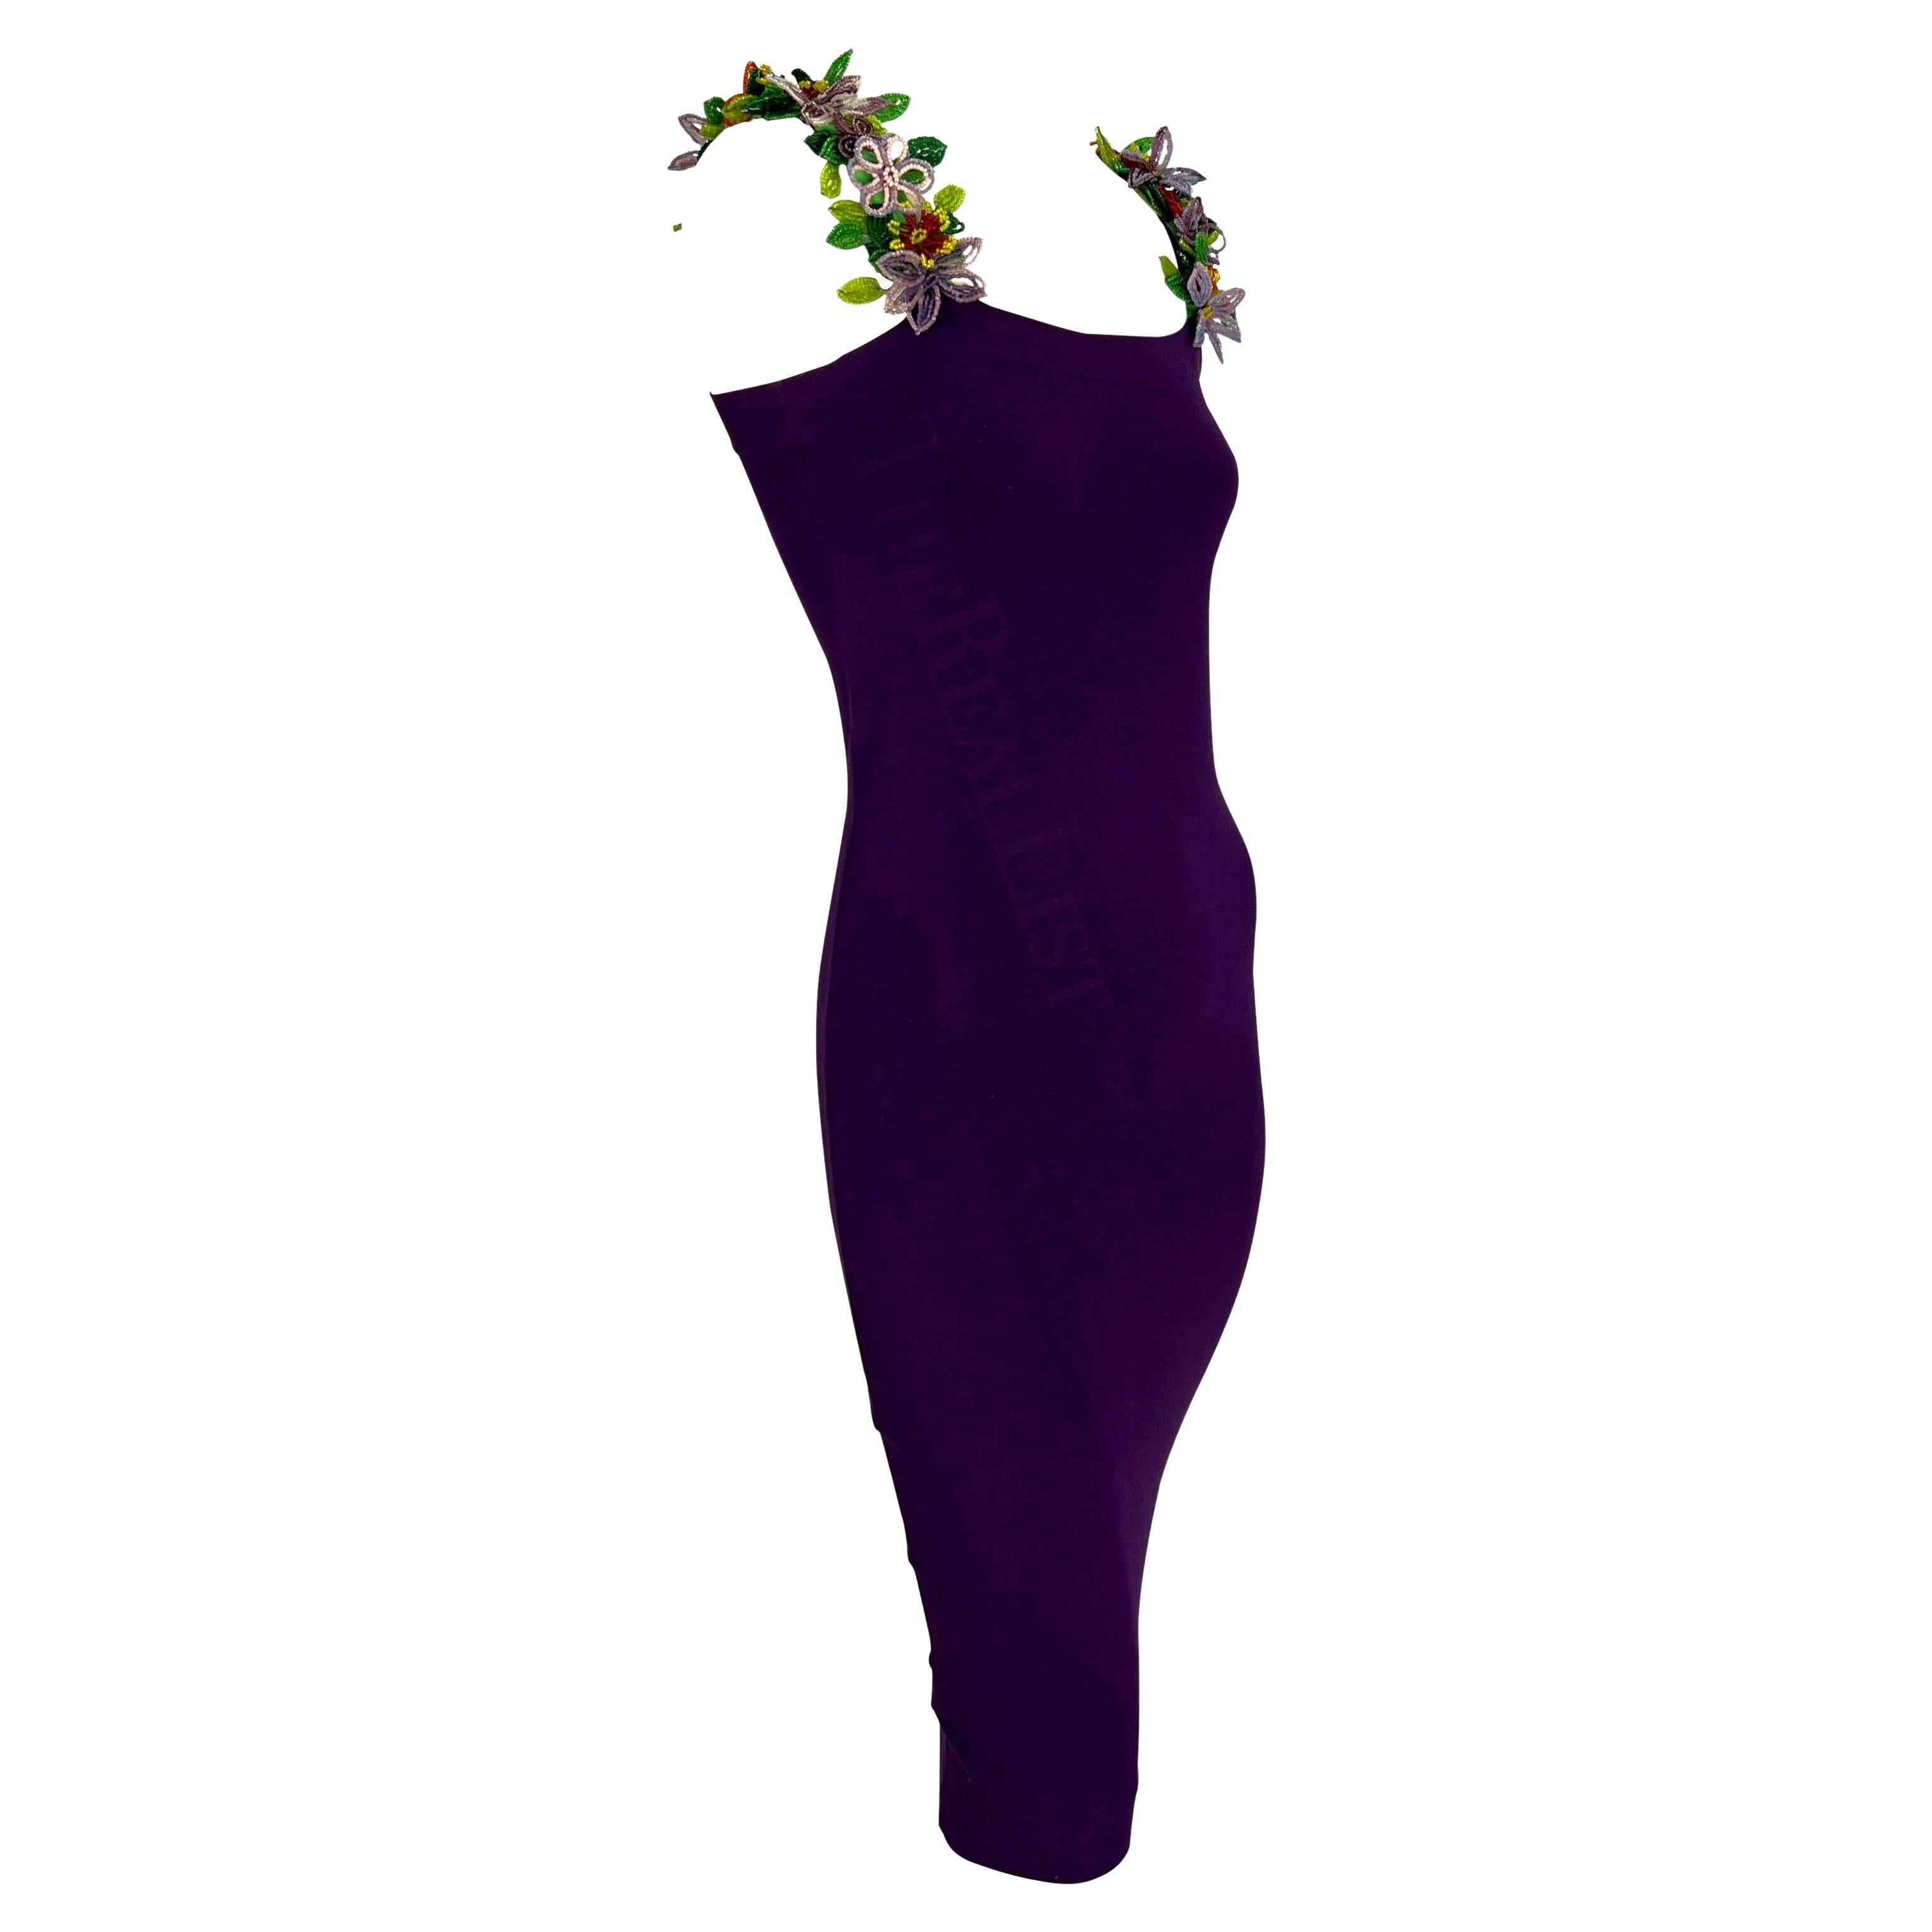 S/S 1992 Dolce & Gabbana Purple Mini Dress Floral Beaded Straps For Sale 7